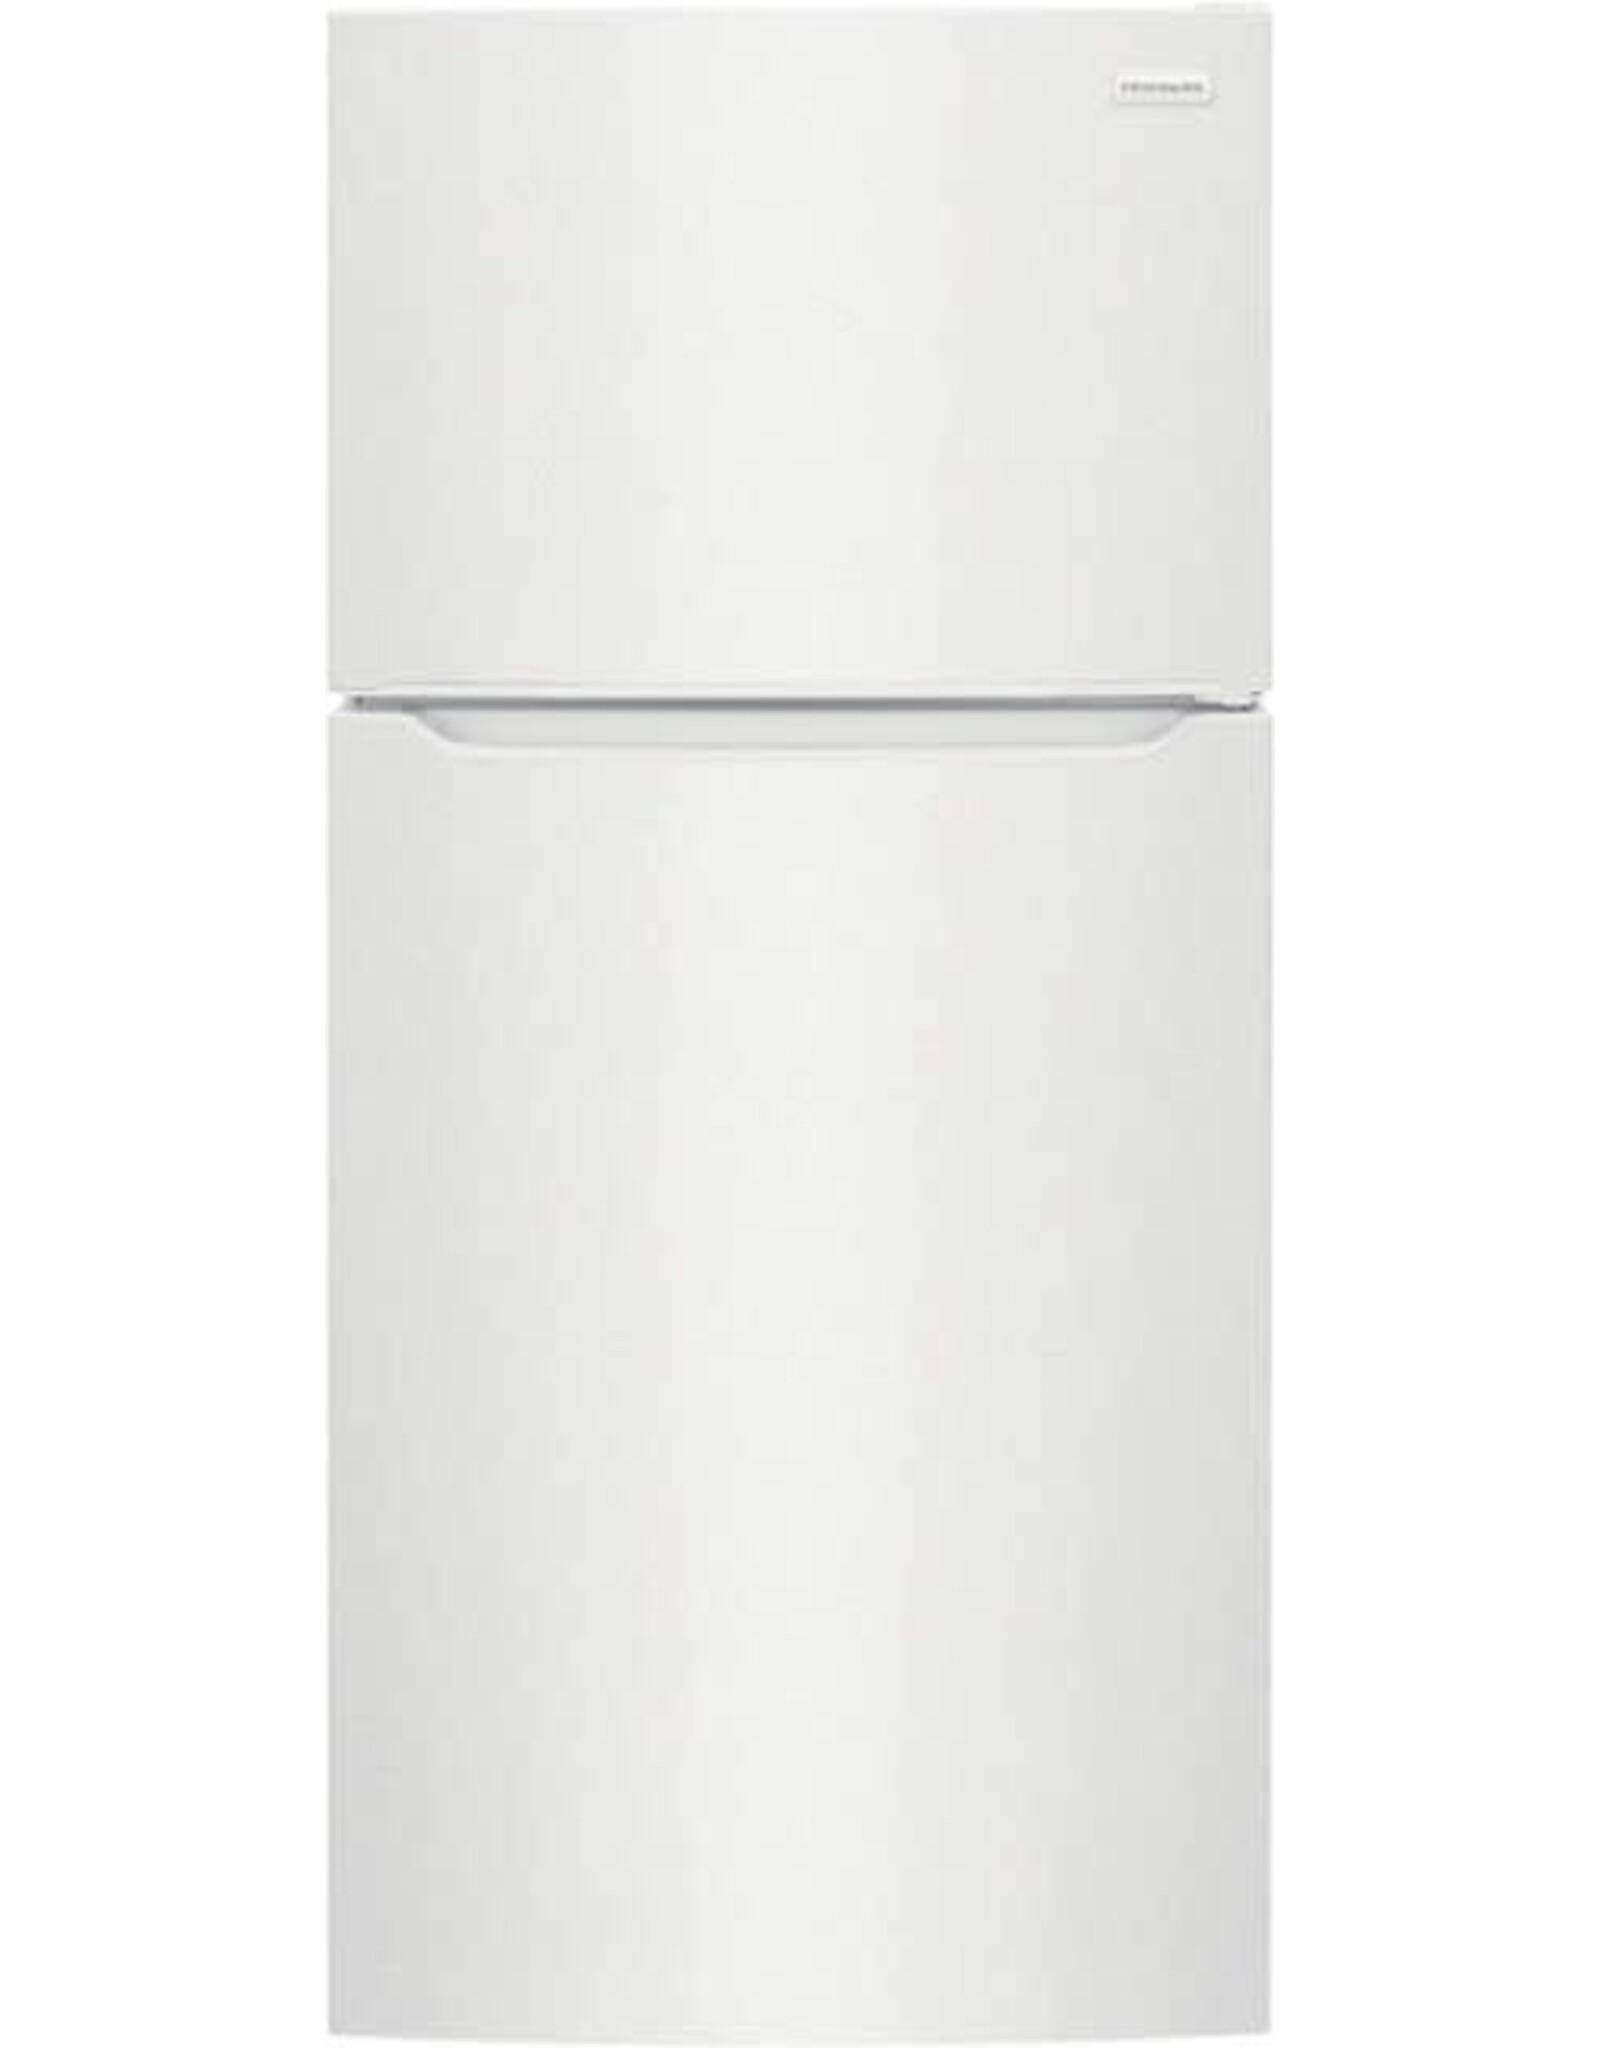 FRIGIDAIRE FFTR1814WW 18.3 Cu. Ft. Top Freezer Refrigerator in White